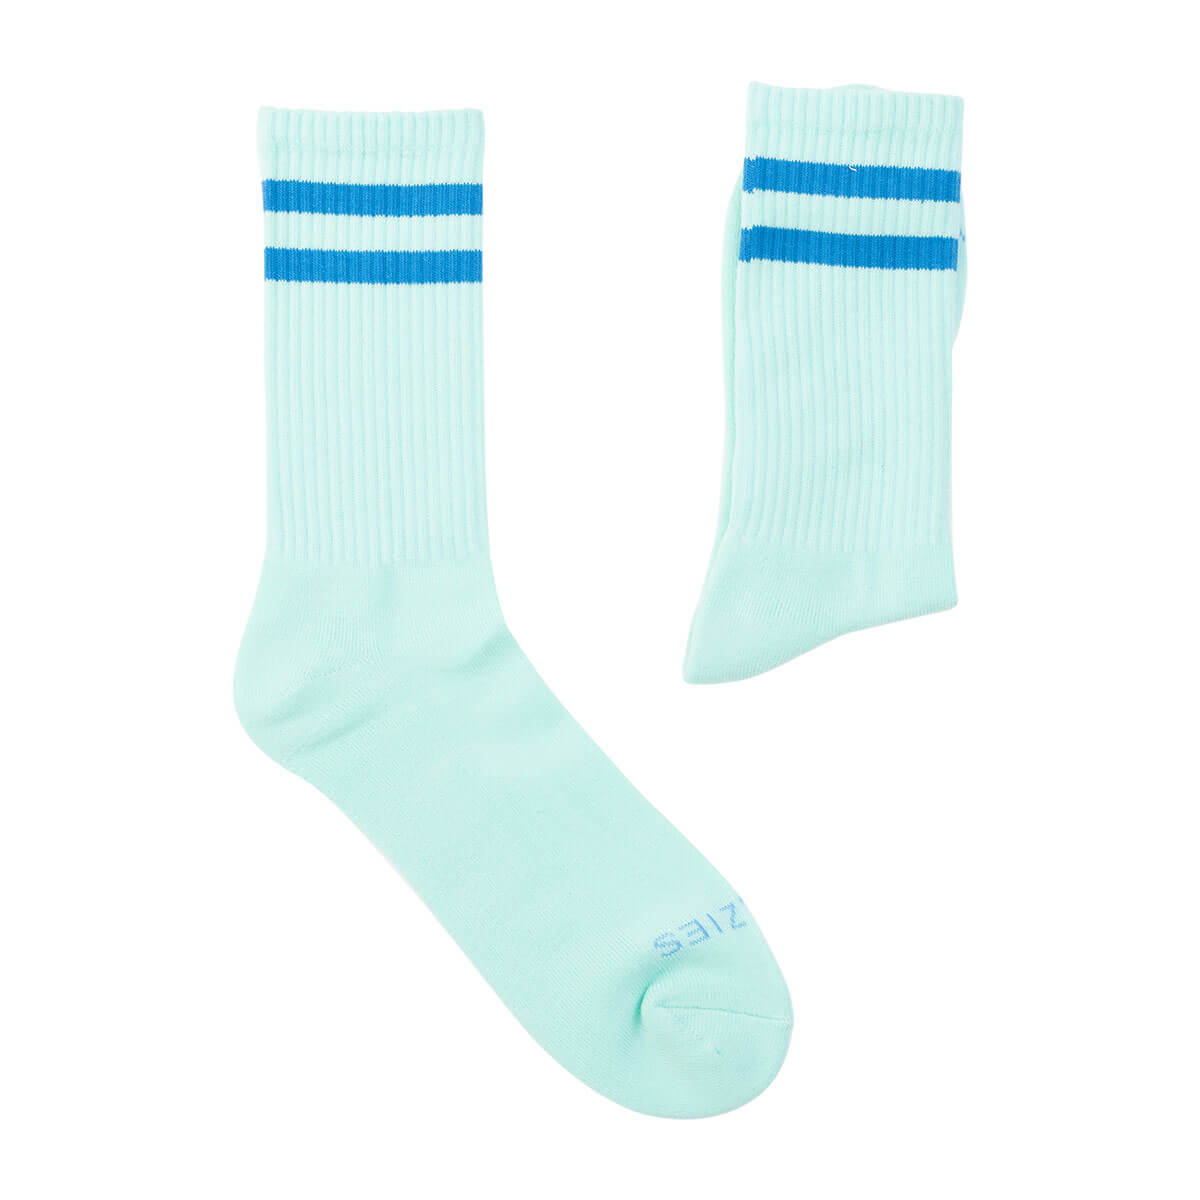 Socks - Mint & Royal Blue